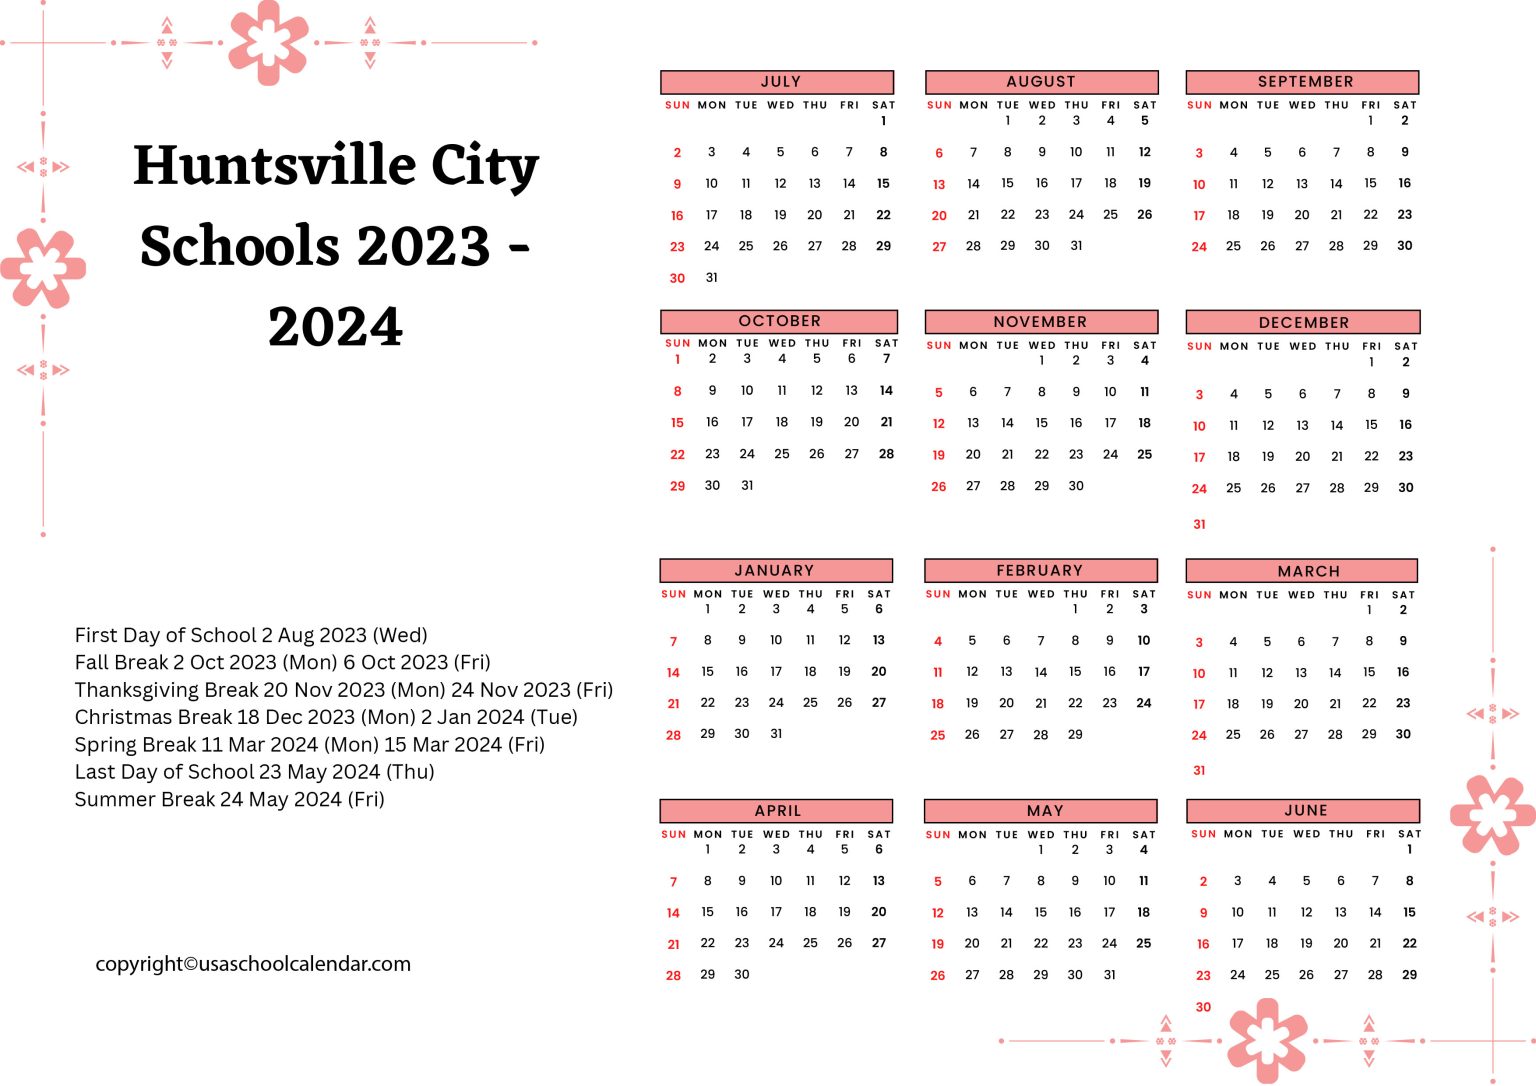 Huntsville City Schools Calendar & Holidays 20232024 [HCS]